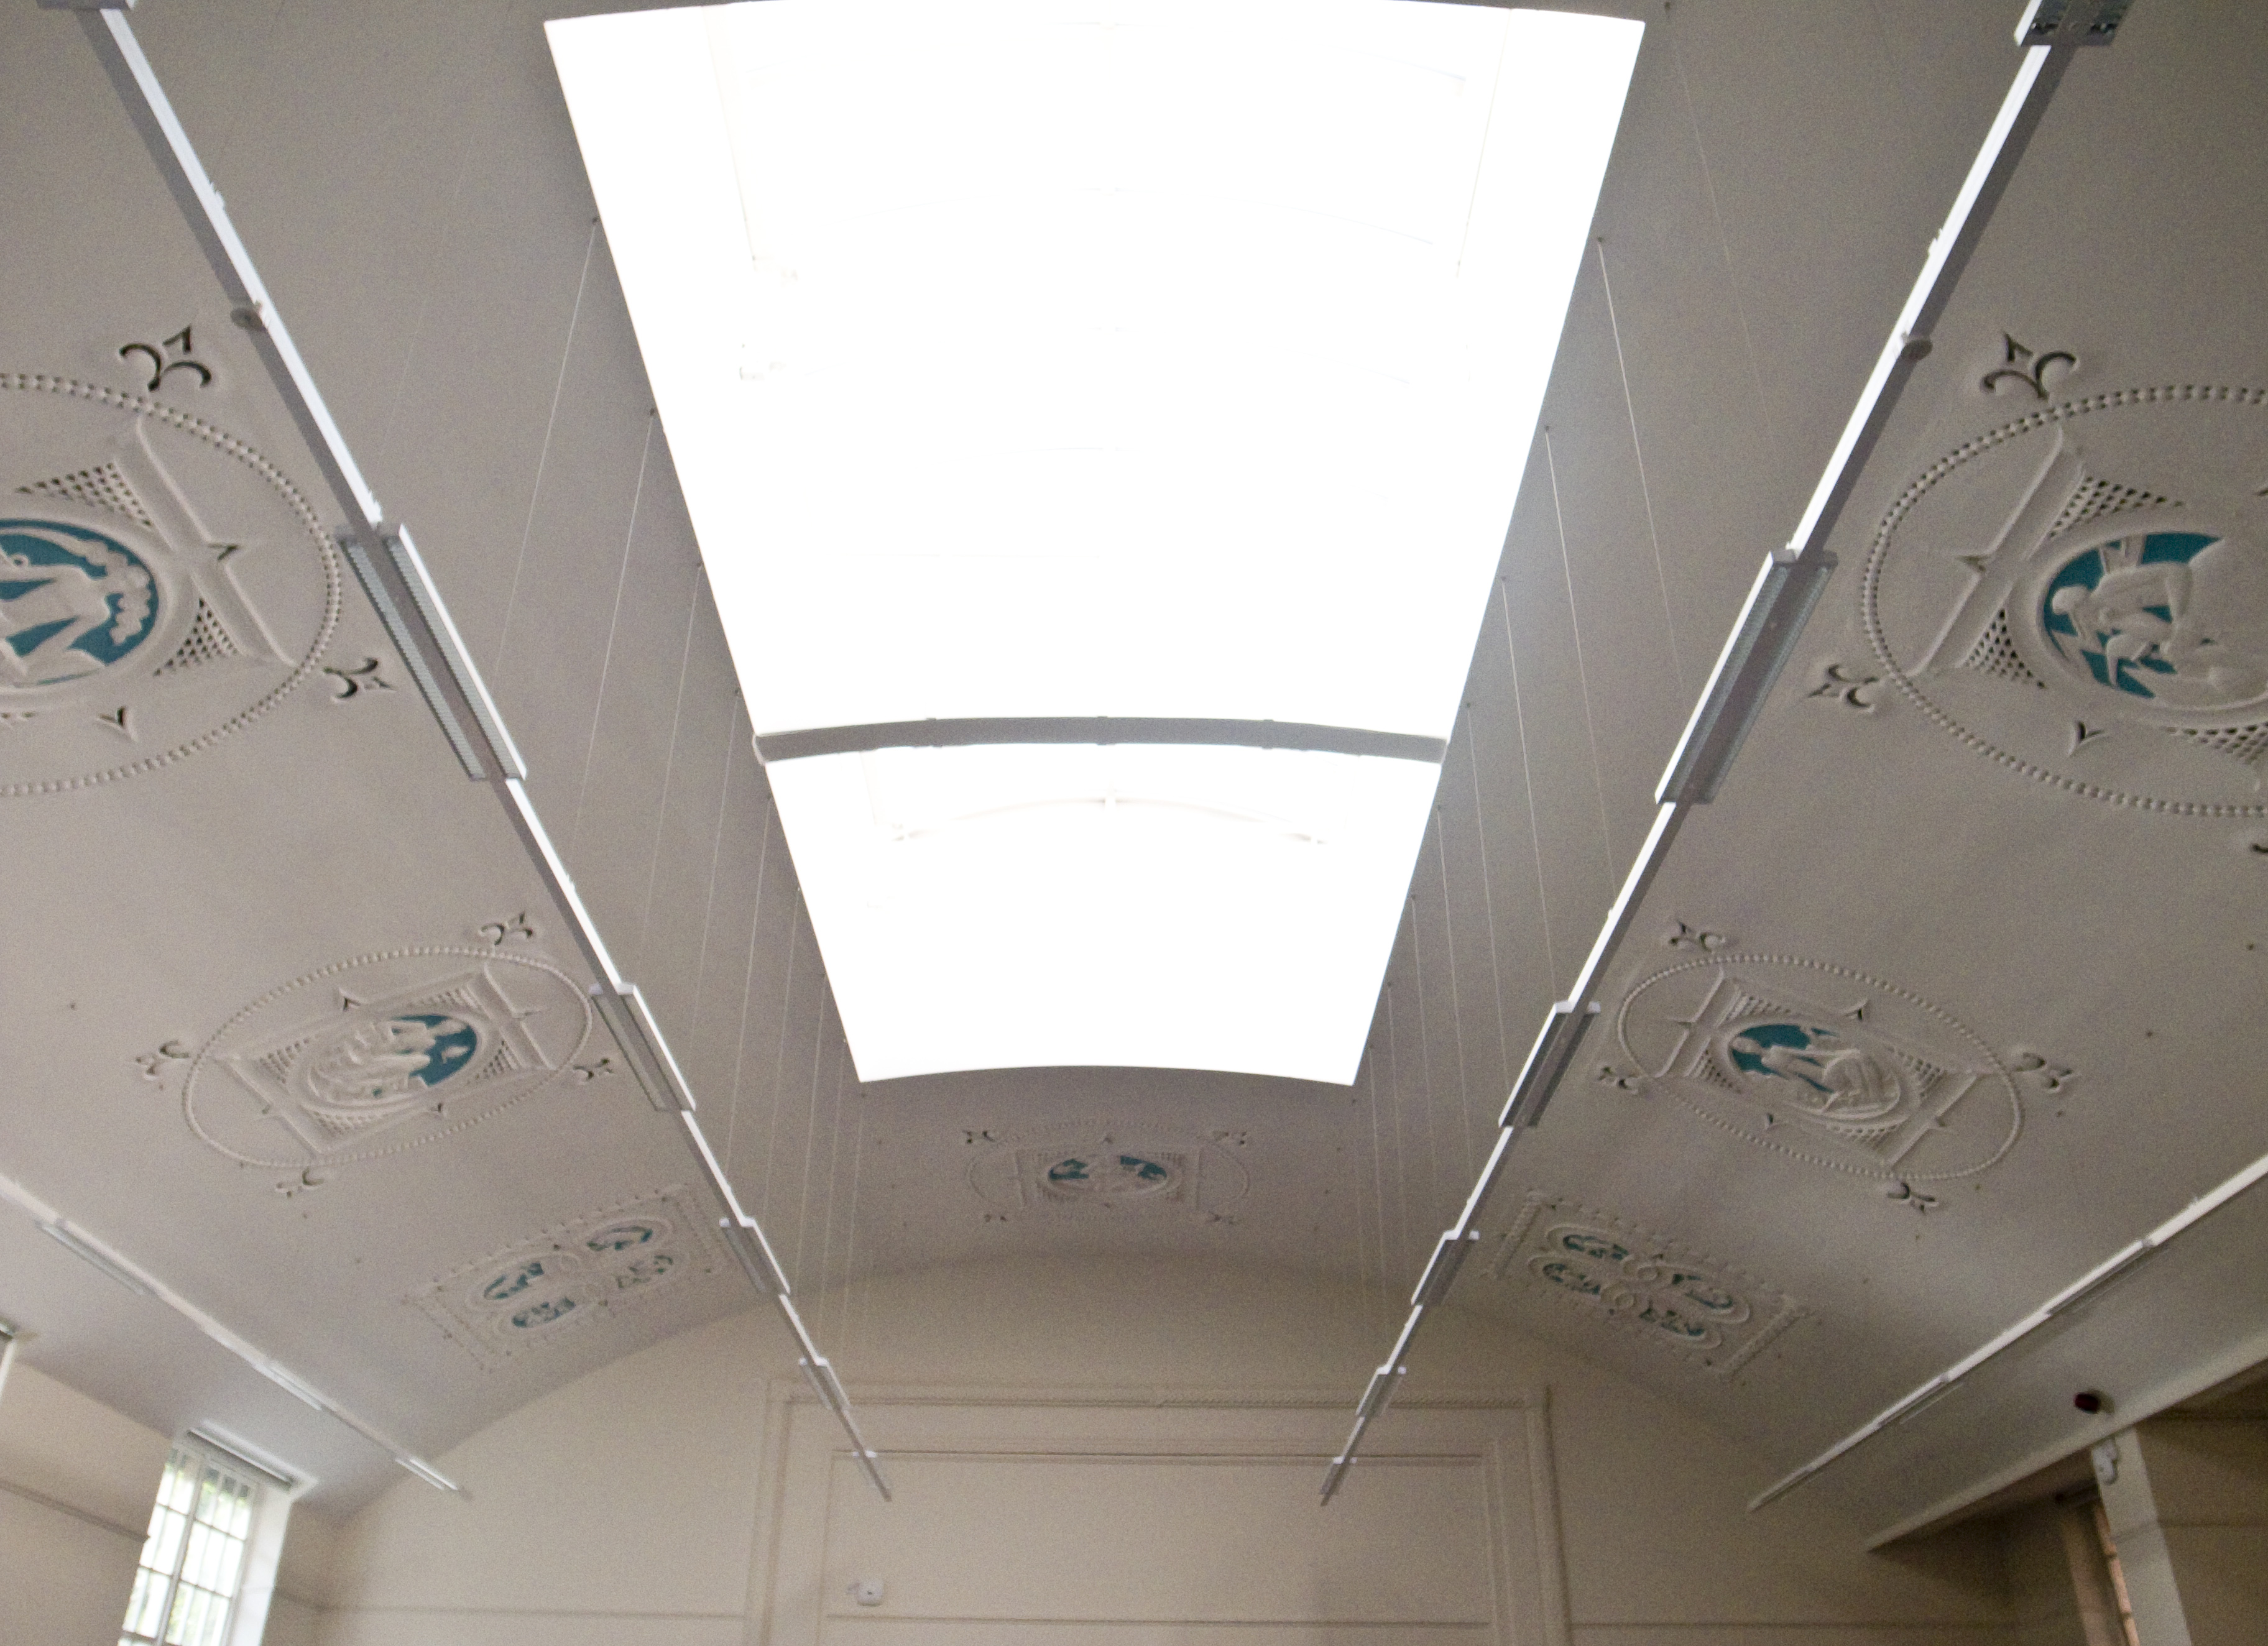 File Moseley School Ceiling Panels 89 Jpg Wikimedia Commons